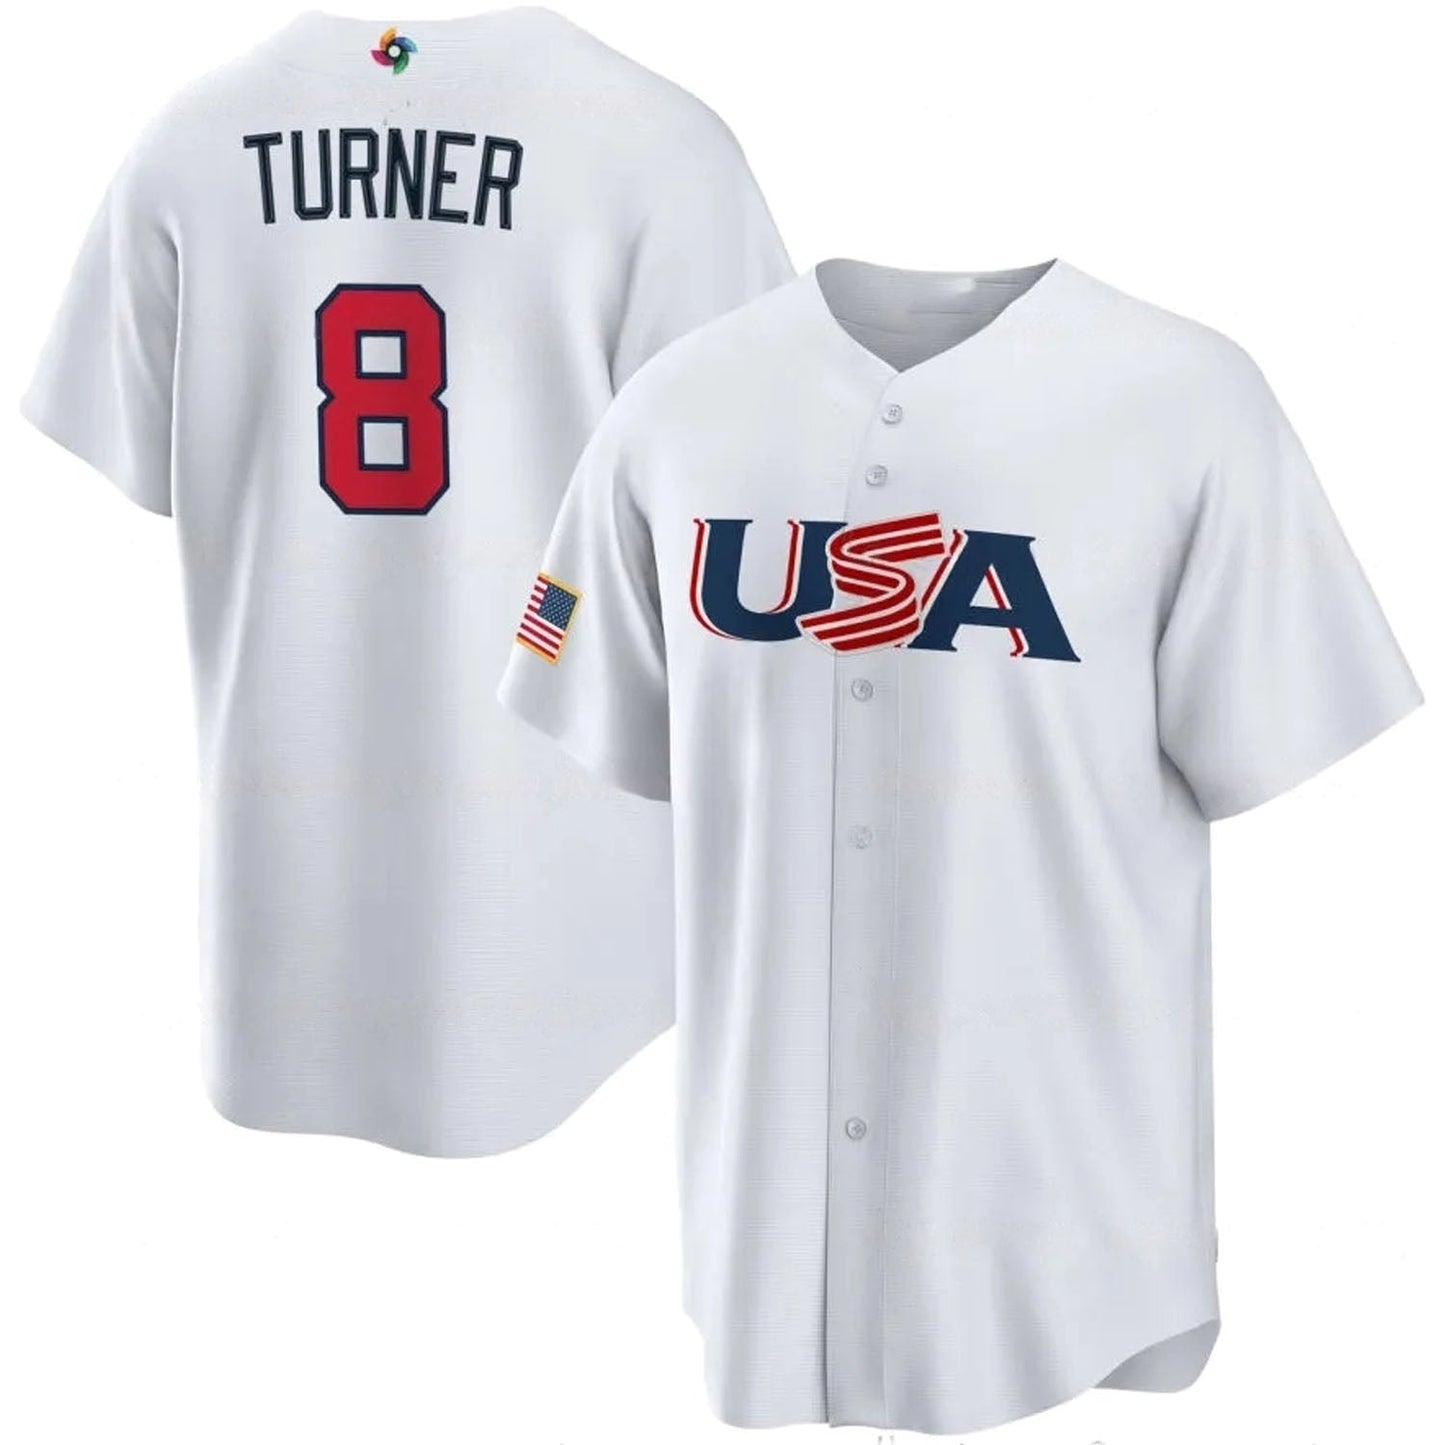 MLB Trea Turner USA 8 Jersey